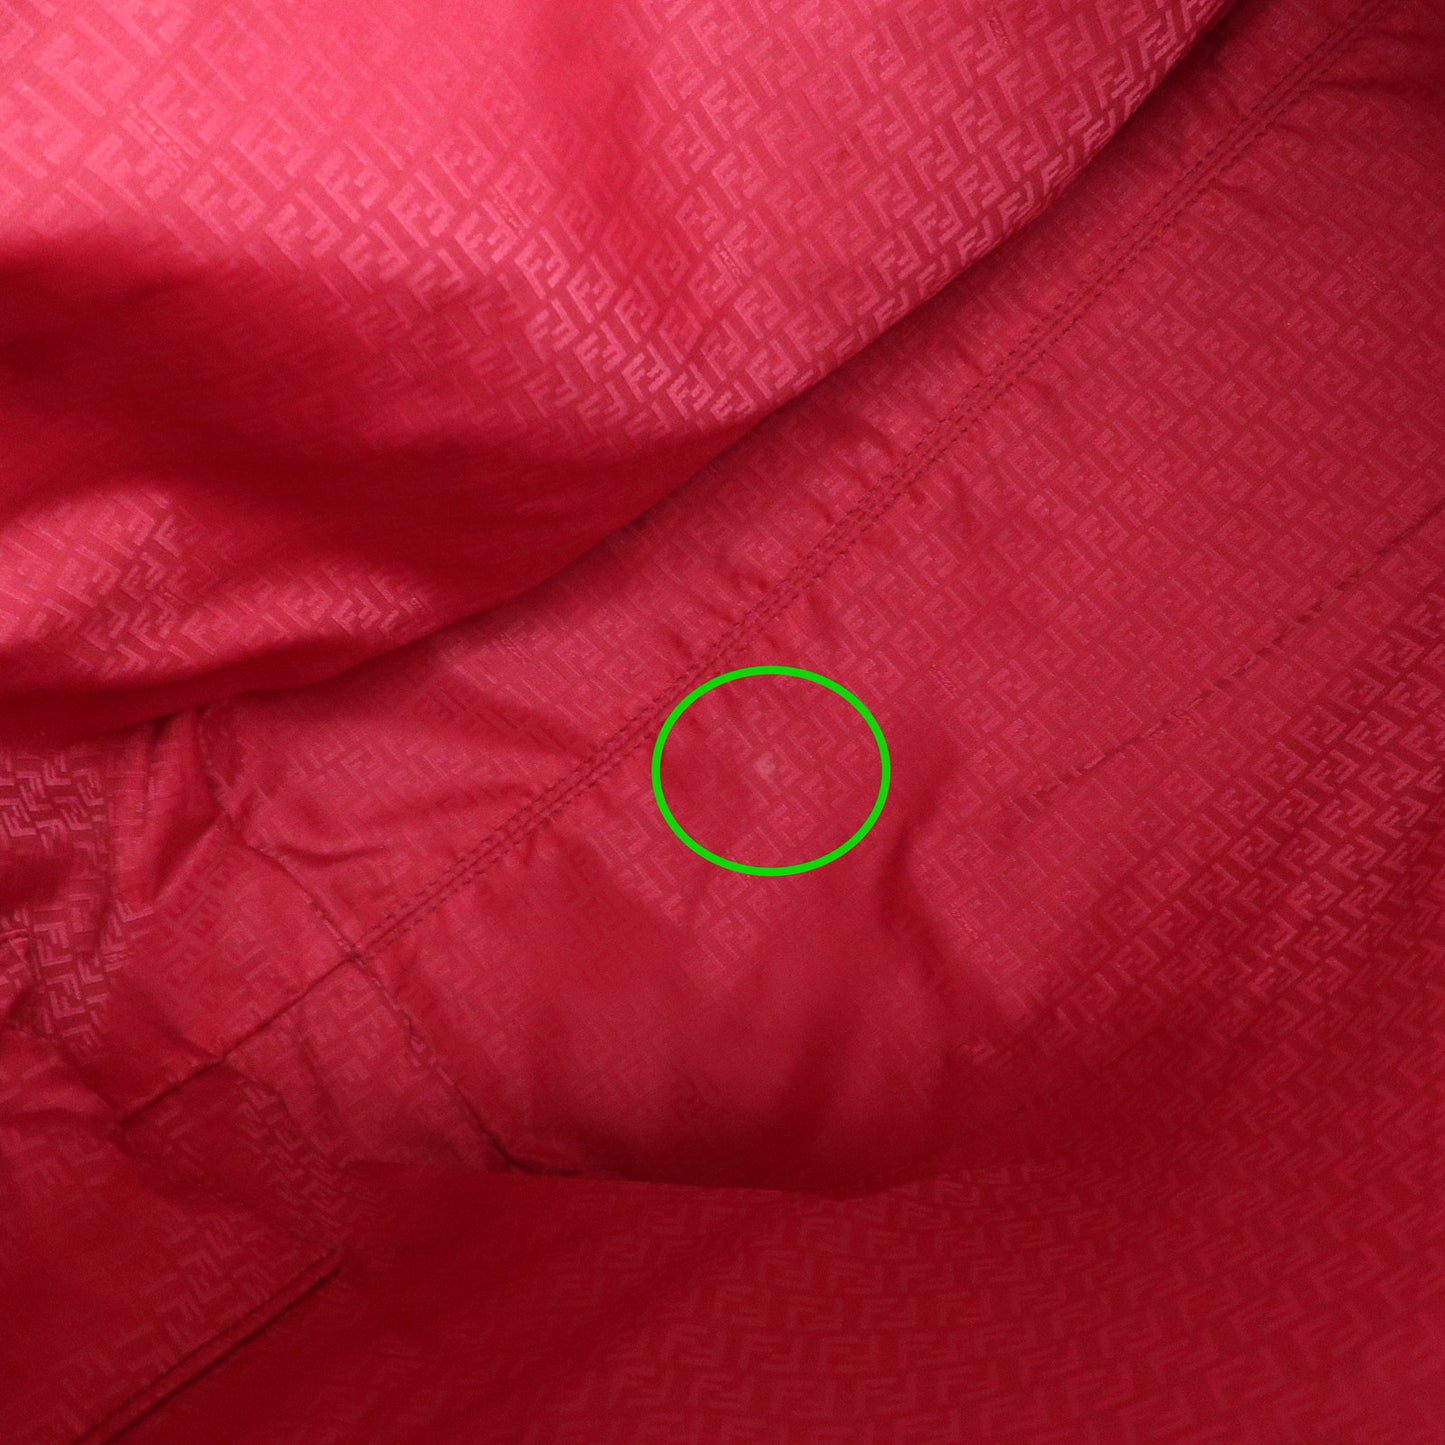 FENDI Zucca PVC Tote Bag Shoulder Bag Khaki Black Pink 8BH199